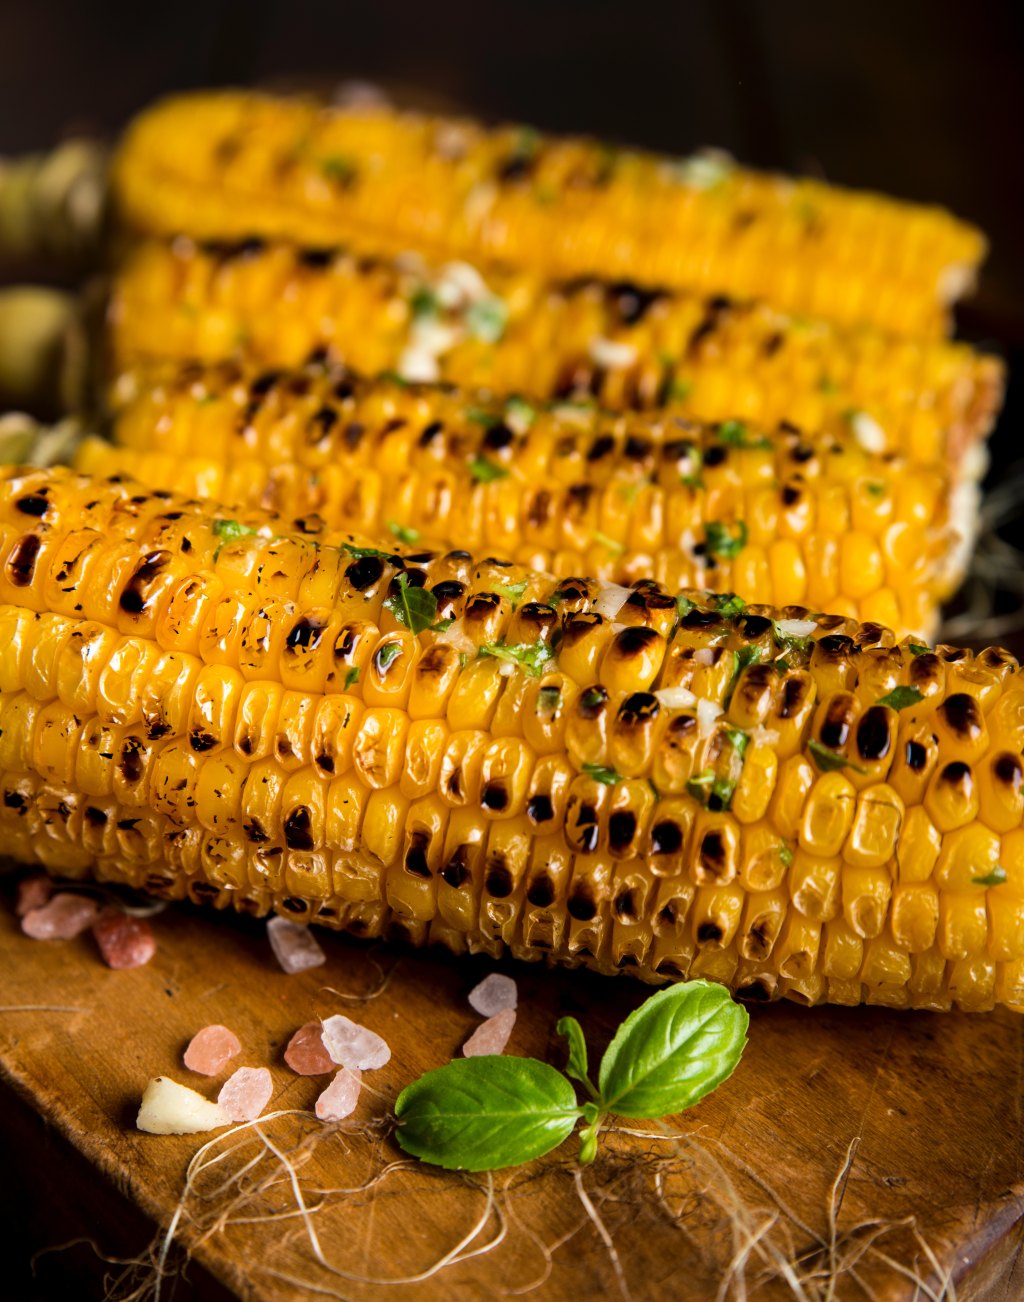 Gluten-Free But Still Having Symptoms…Could Corn Be The Culprit?